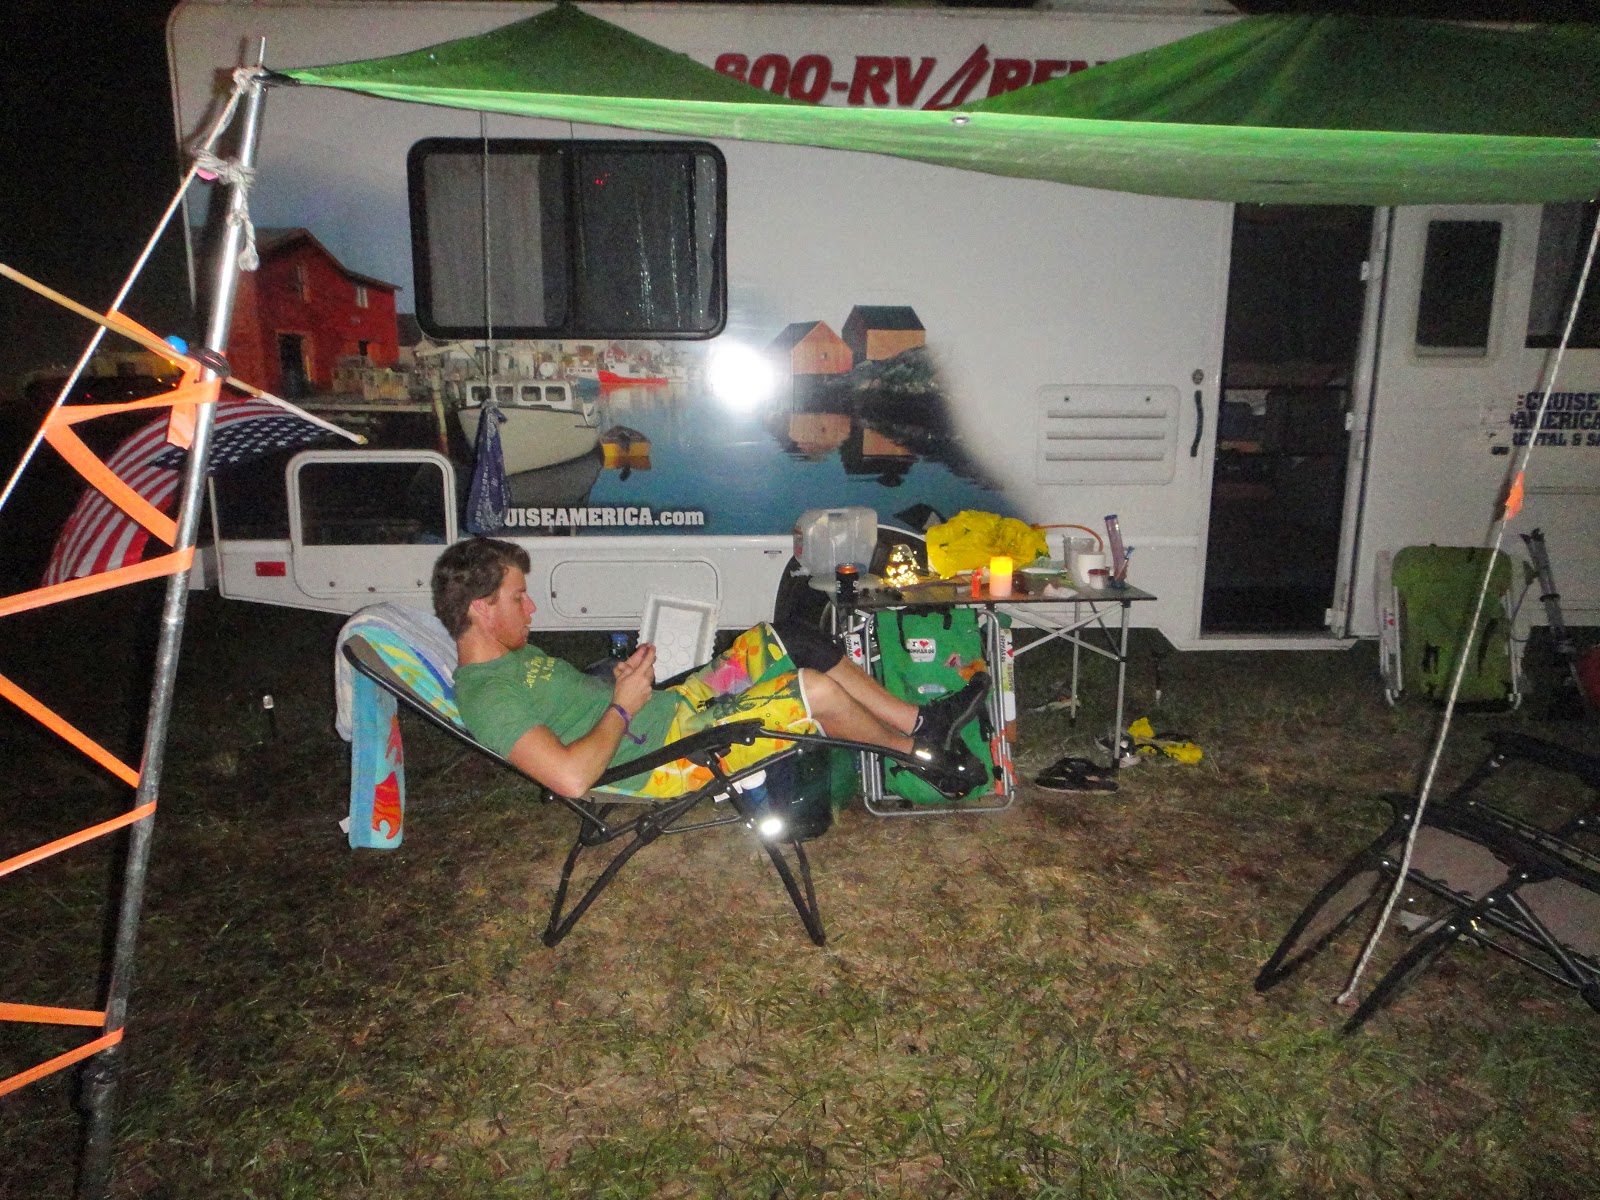 Bonnaroo Chris campsite 2012